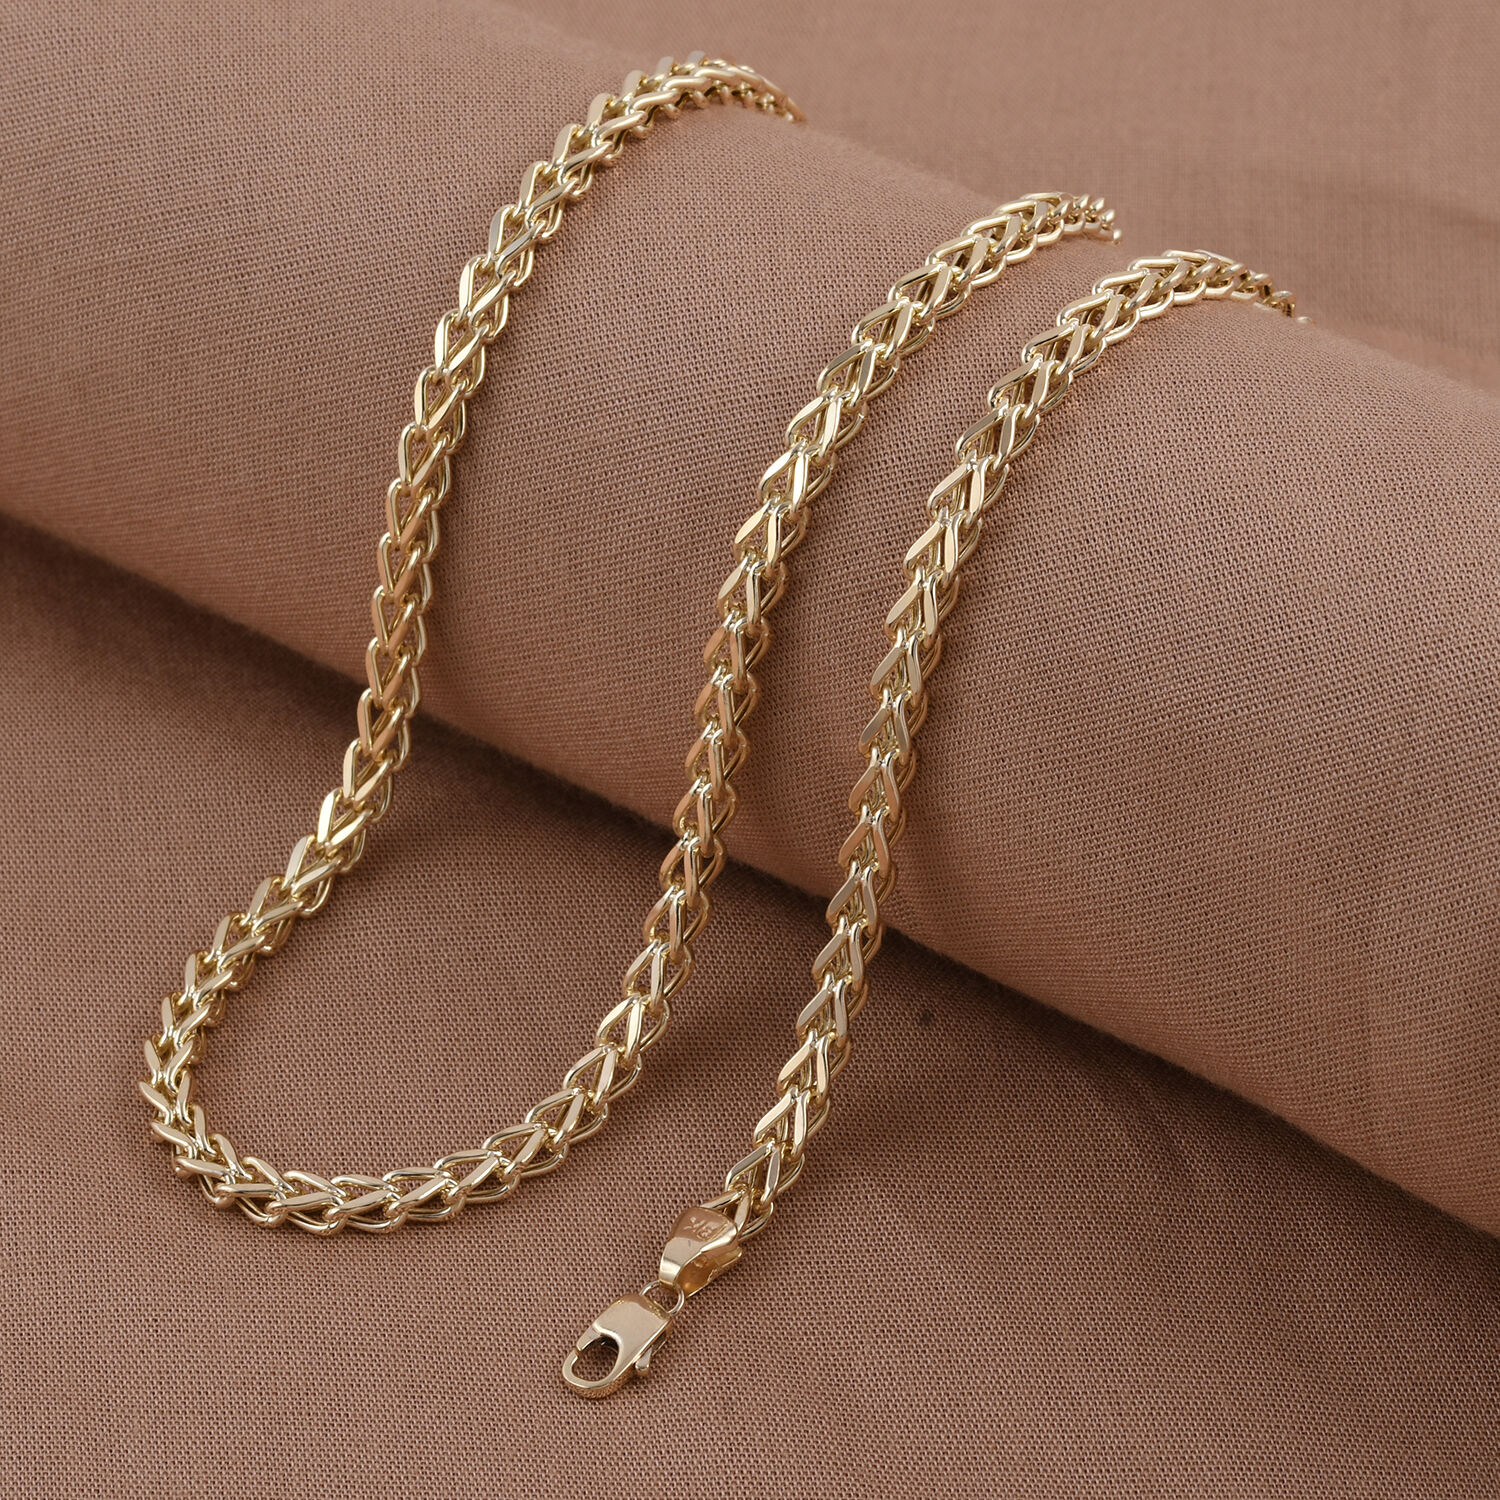 Offers H ANNA NOVA Antique Gold Tone Fancy Intricate Heart Pendant Necklace 